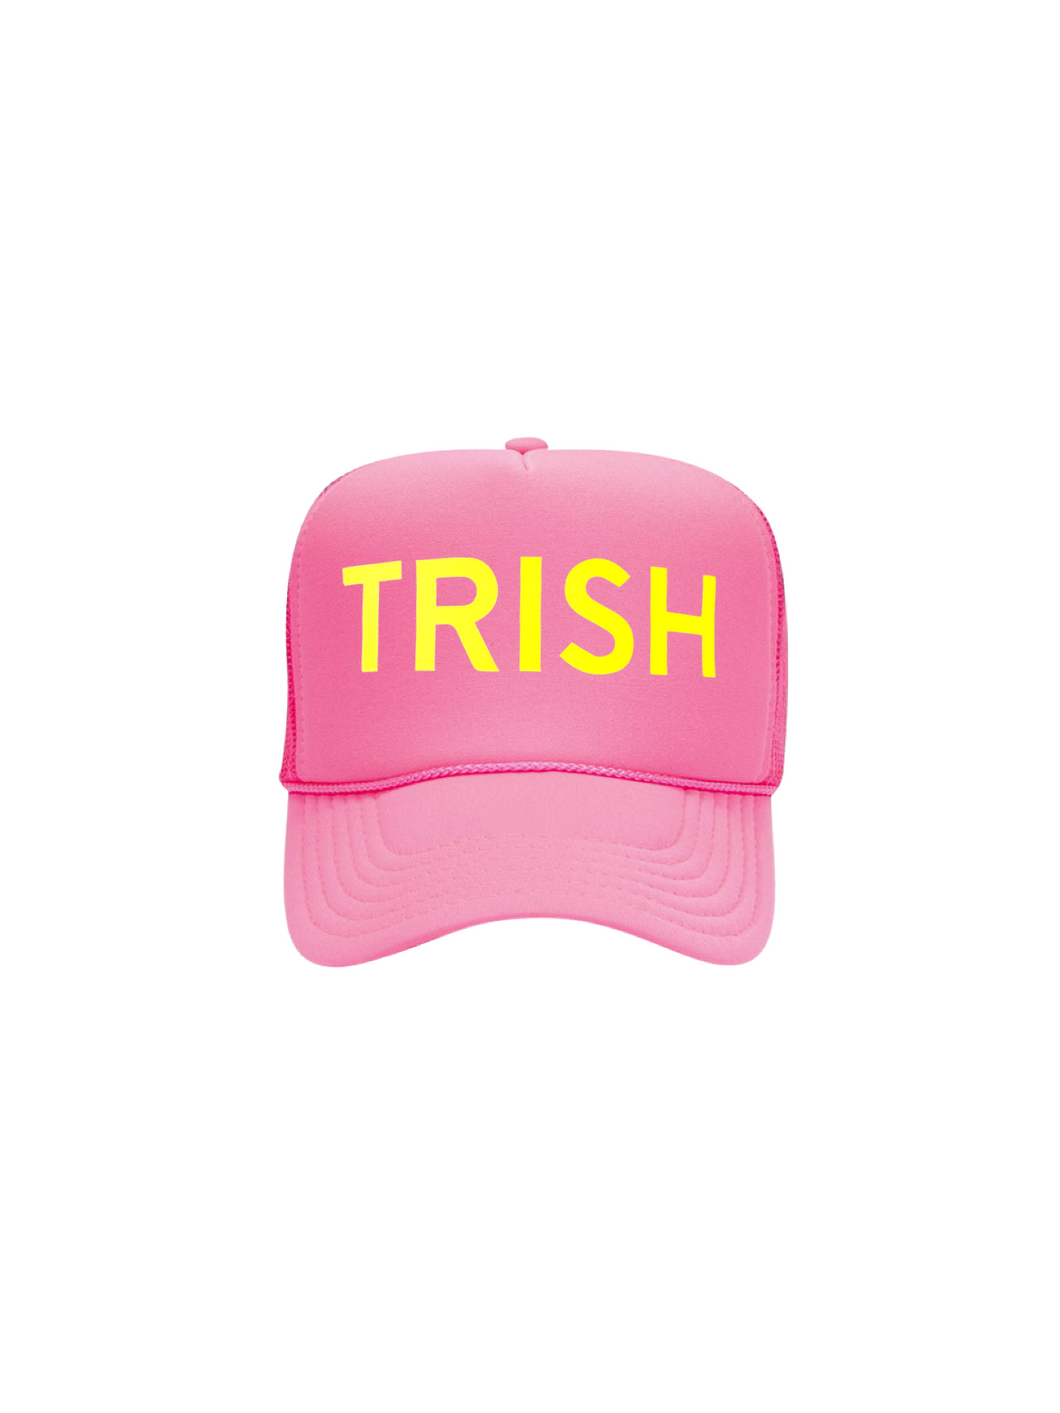 TRISH TRUCKER HAT